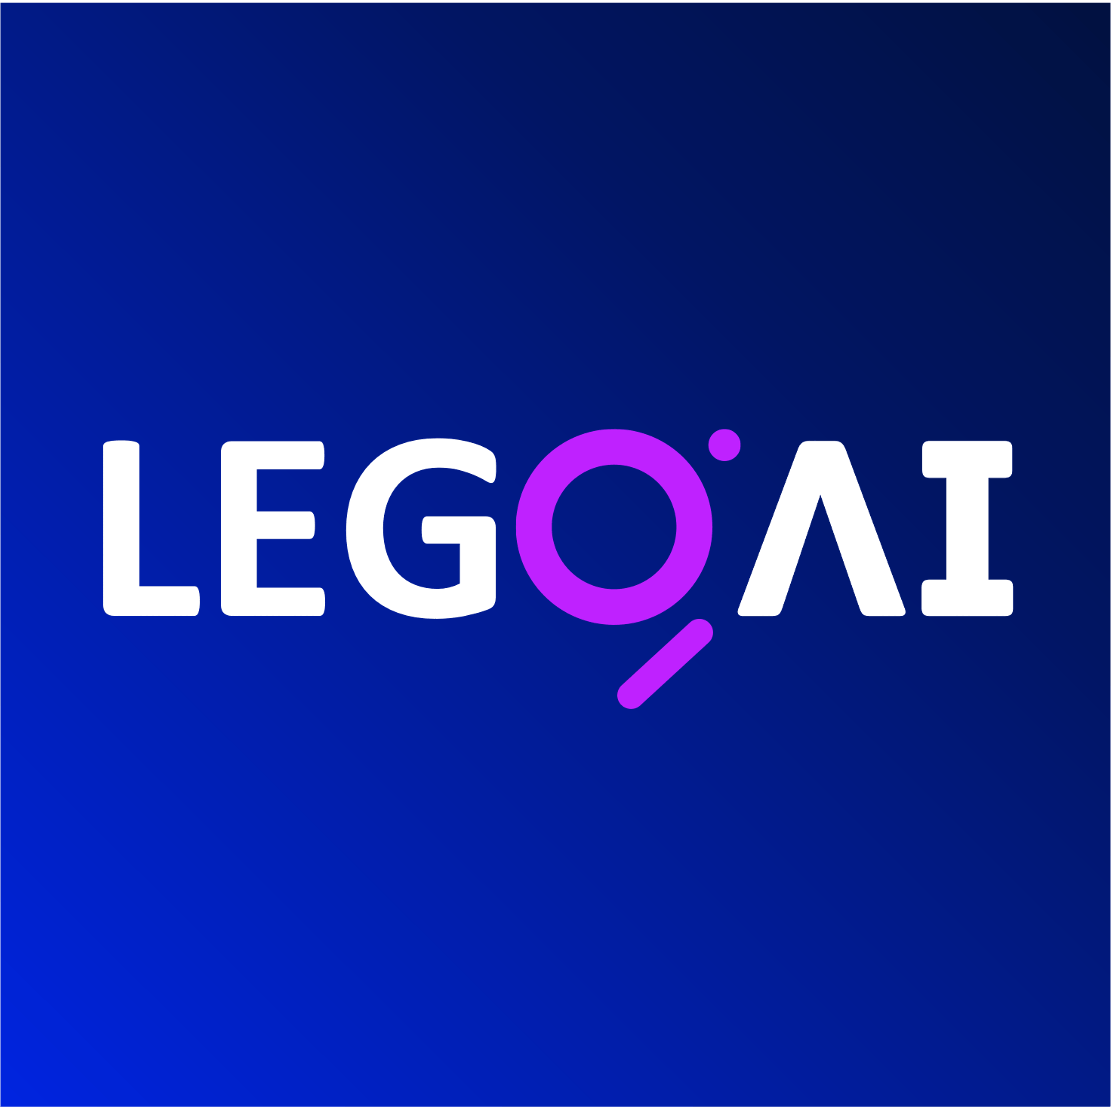 LEGOAI Technologies HackerNoon profile picture